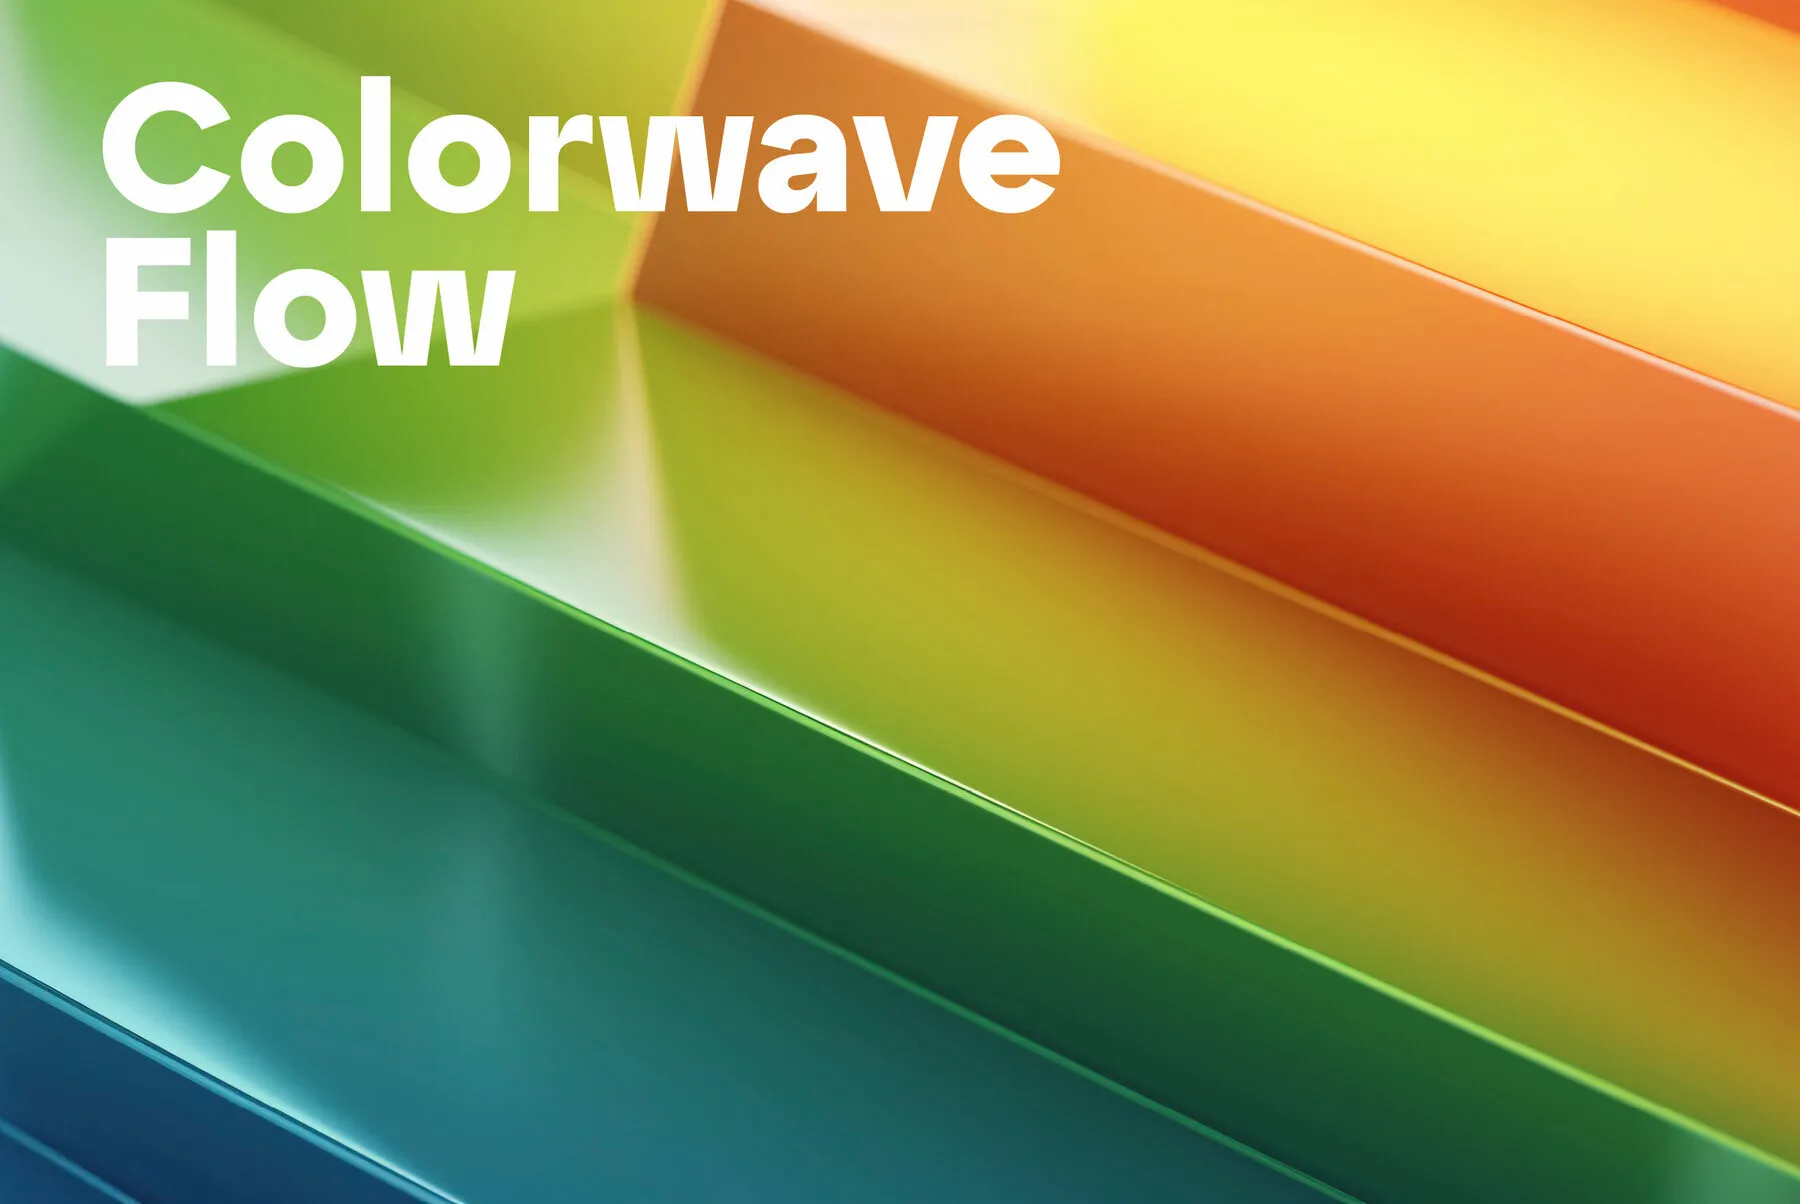 Colorwave Flow